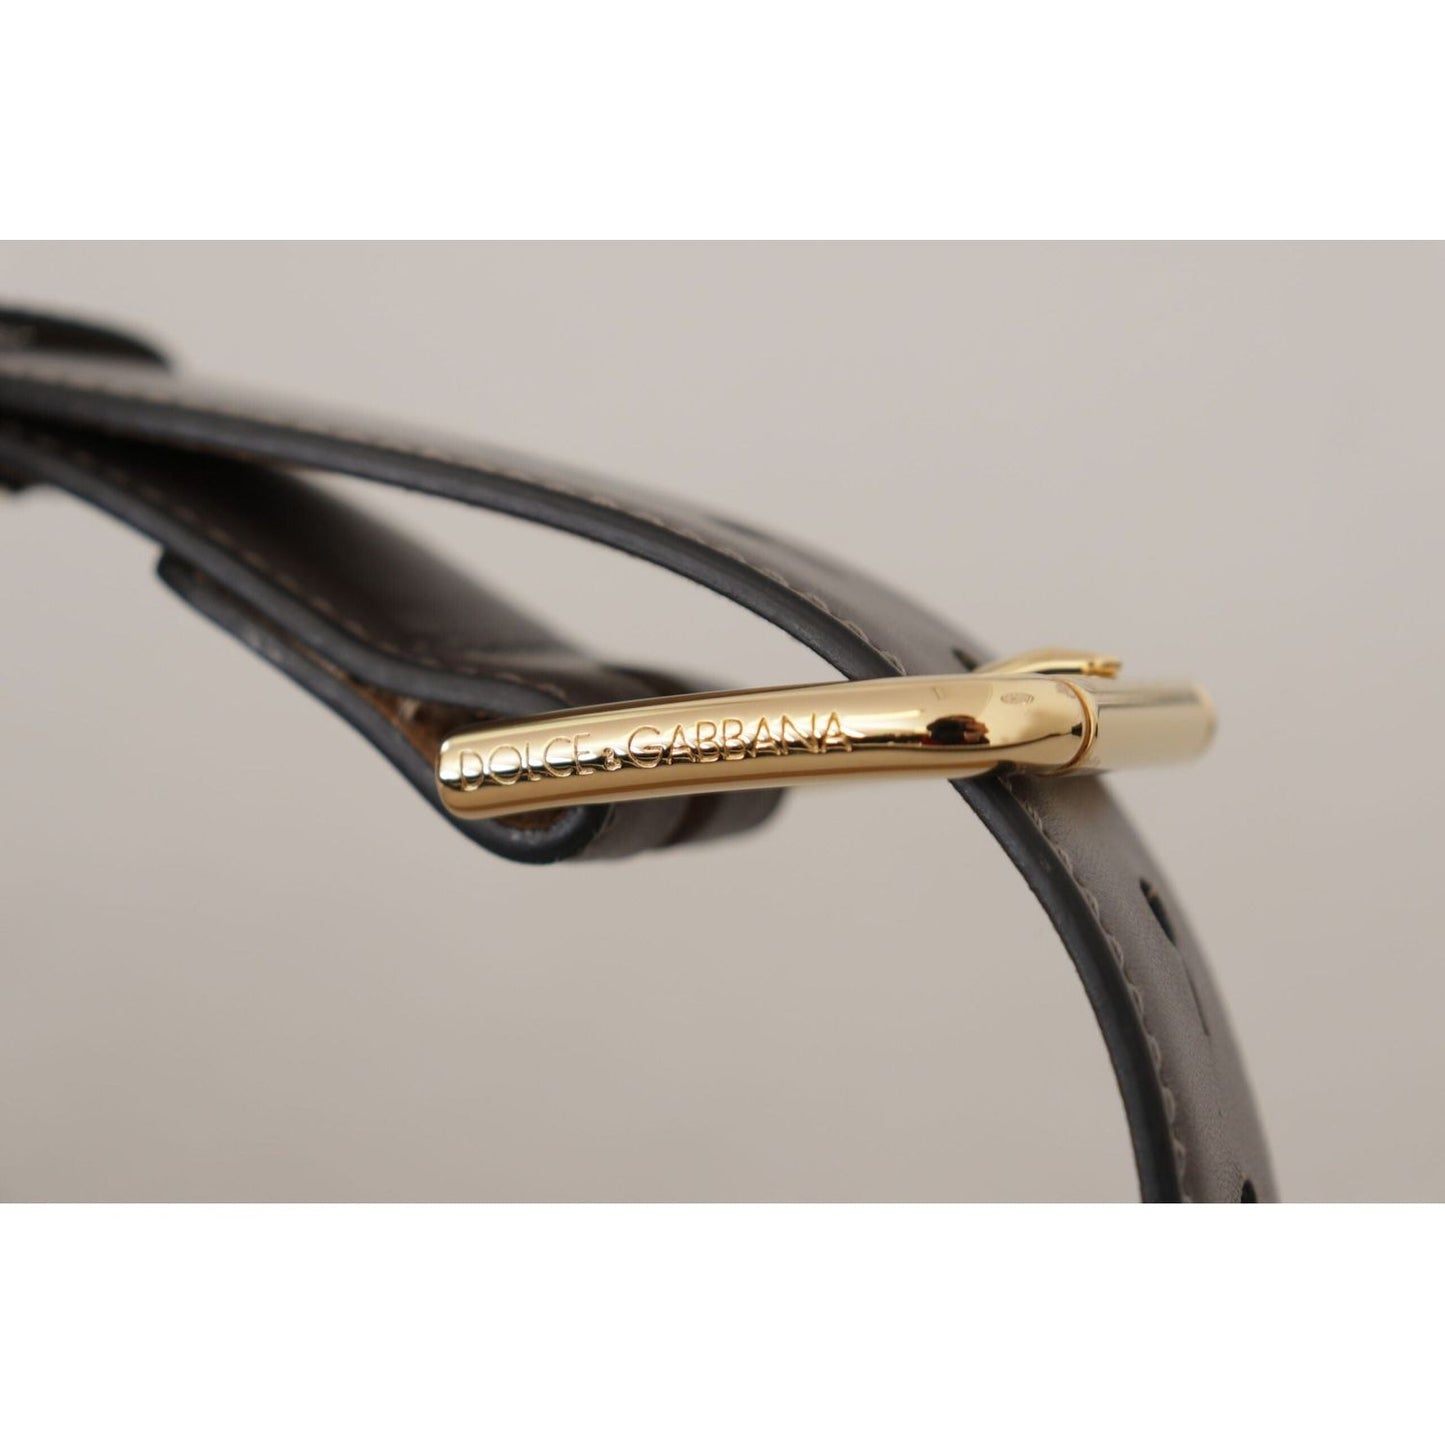 Dolce & Gabbana Elegant Engraved Buckle Leather Belt gray-calfskin-leather-gold-metal-logo-buckle-belt IMG_8910-scaled-acb3559d-d83.jpg